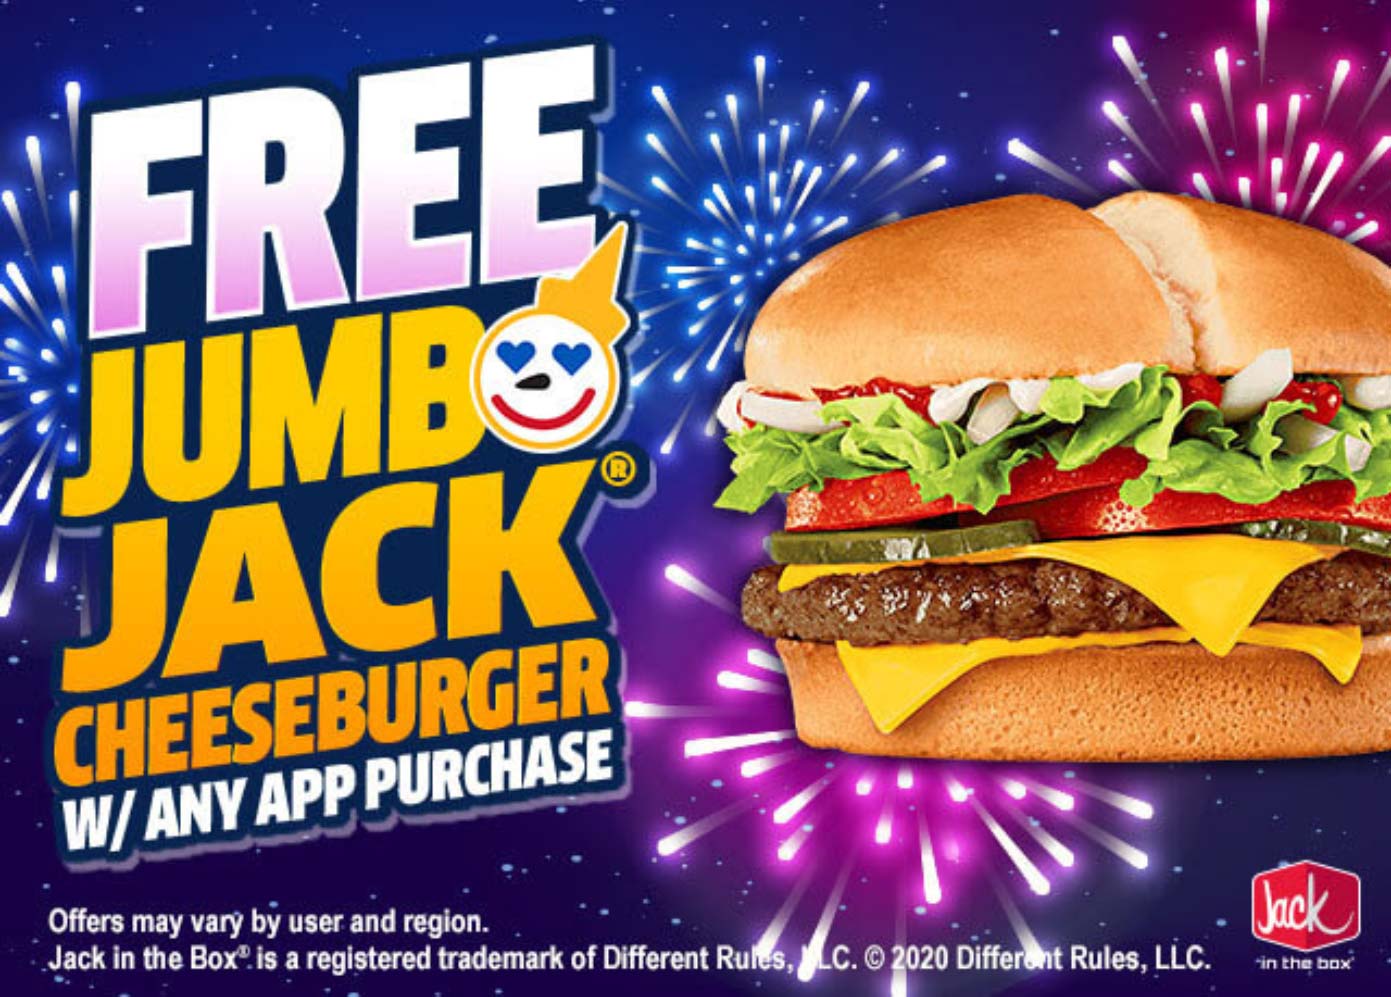 Free jumbo jack cheeseburger today at Jack in the Box via app 